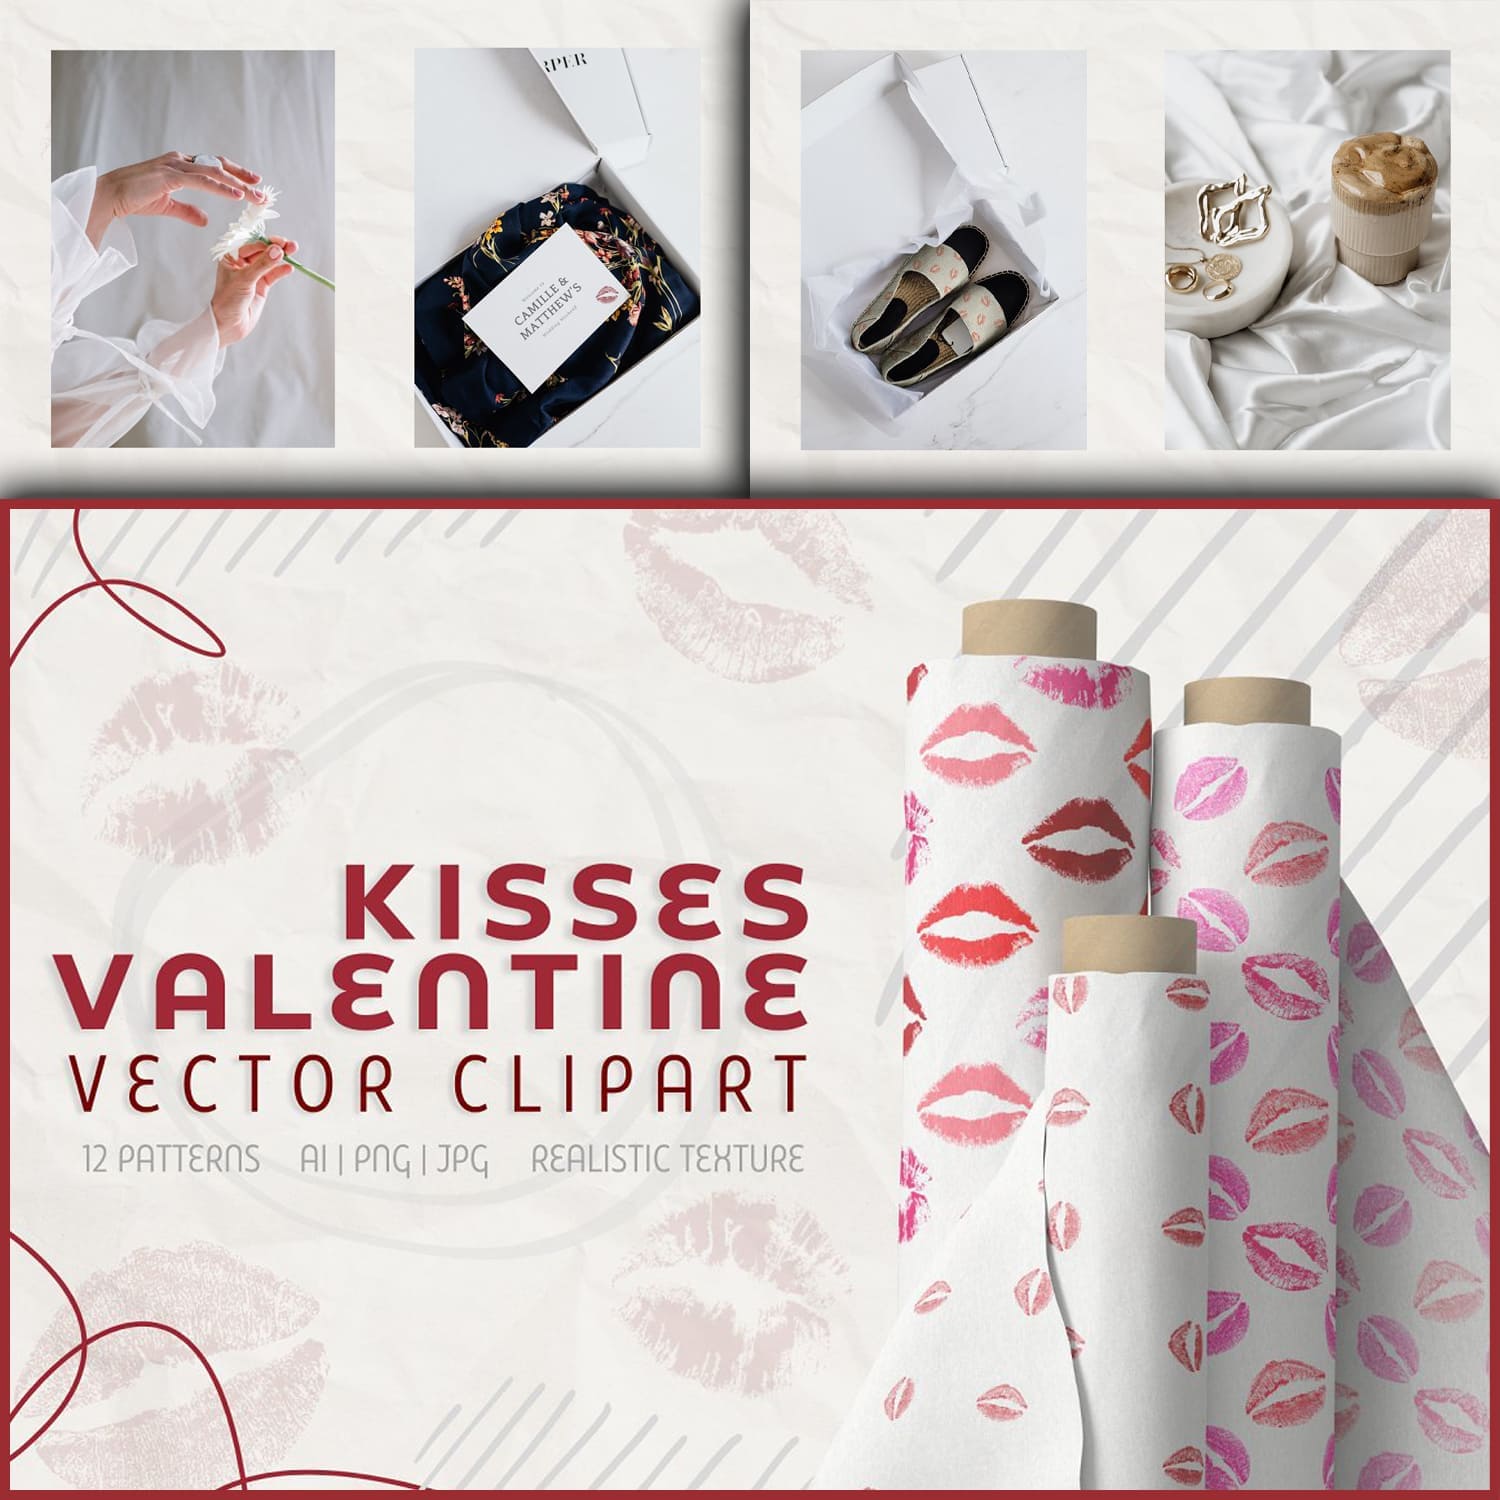 Kisses Valentine vector clipart, second picture 1500x1500.